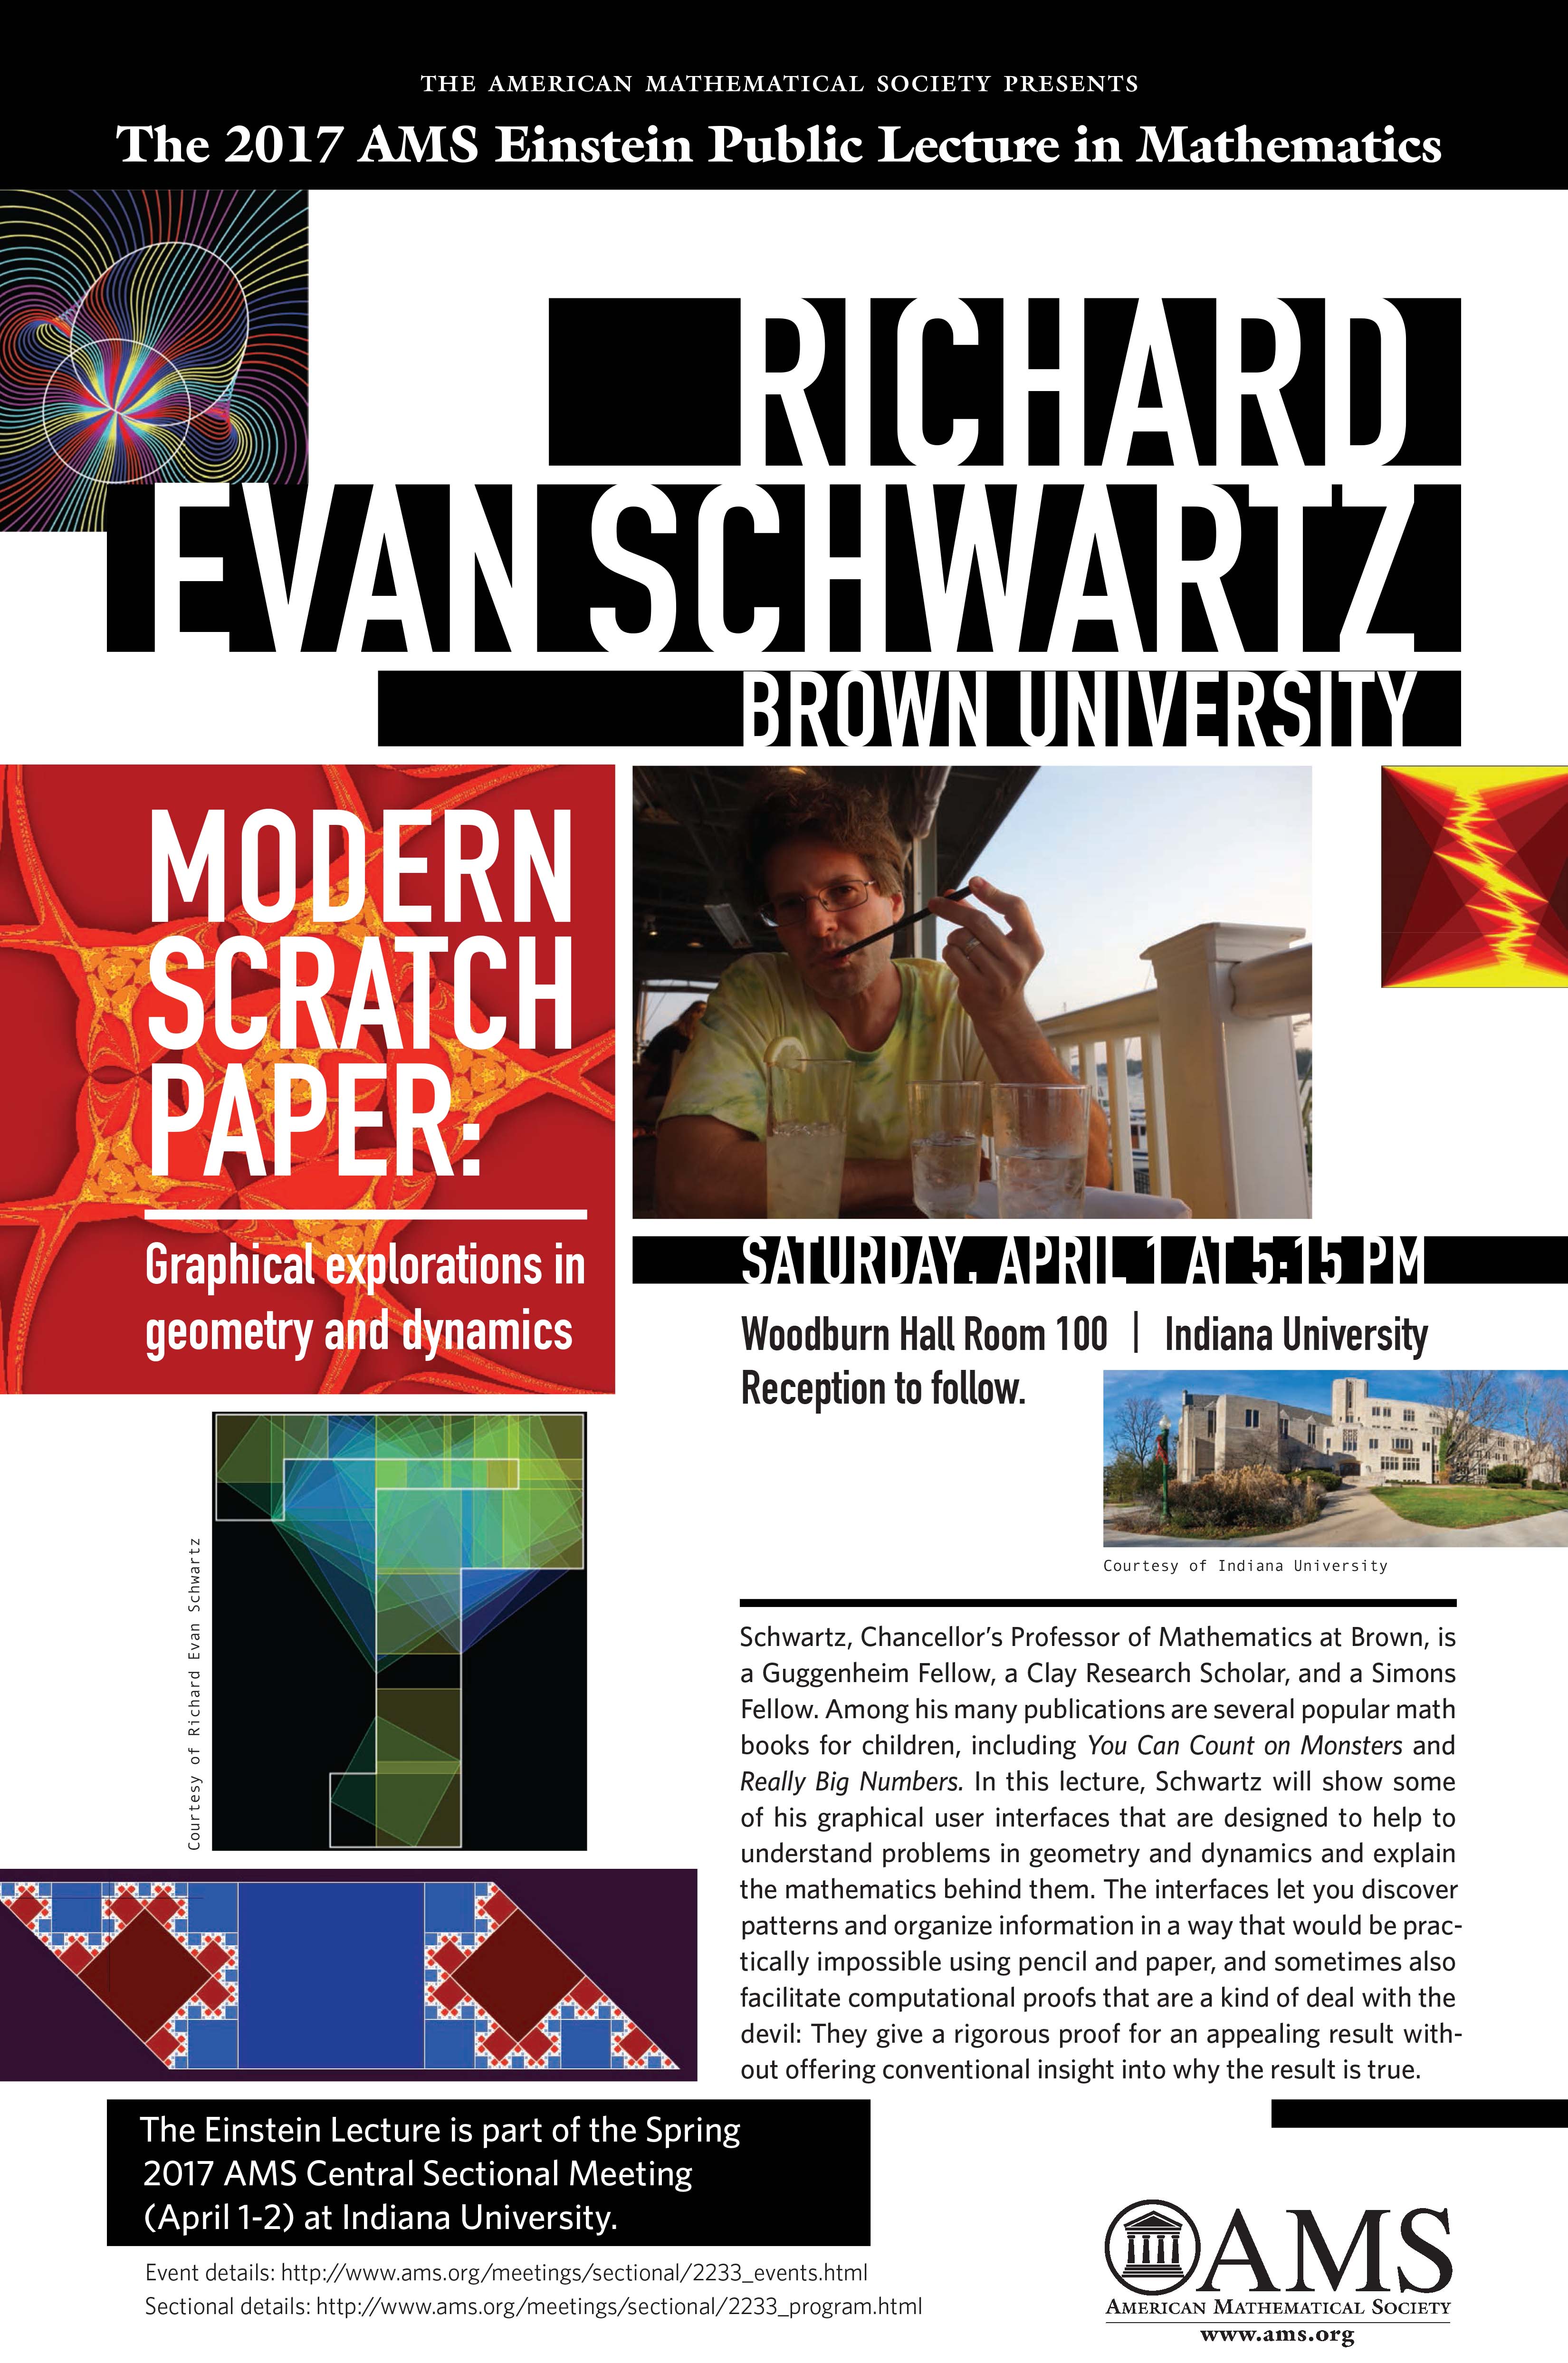 Richard Evan Schwartz Brown University